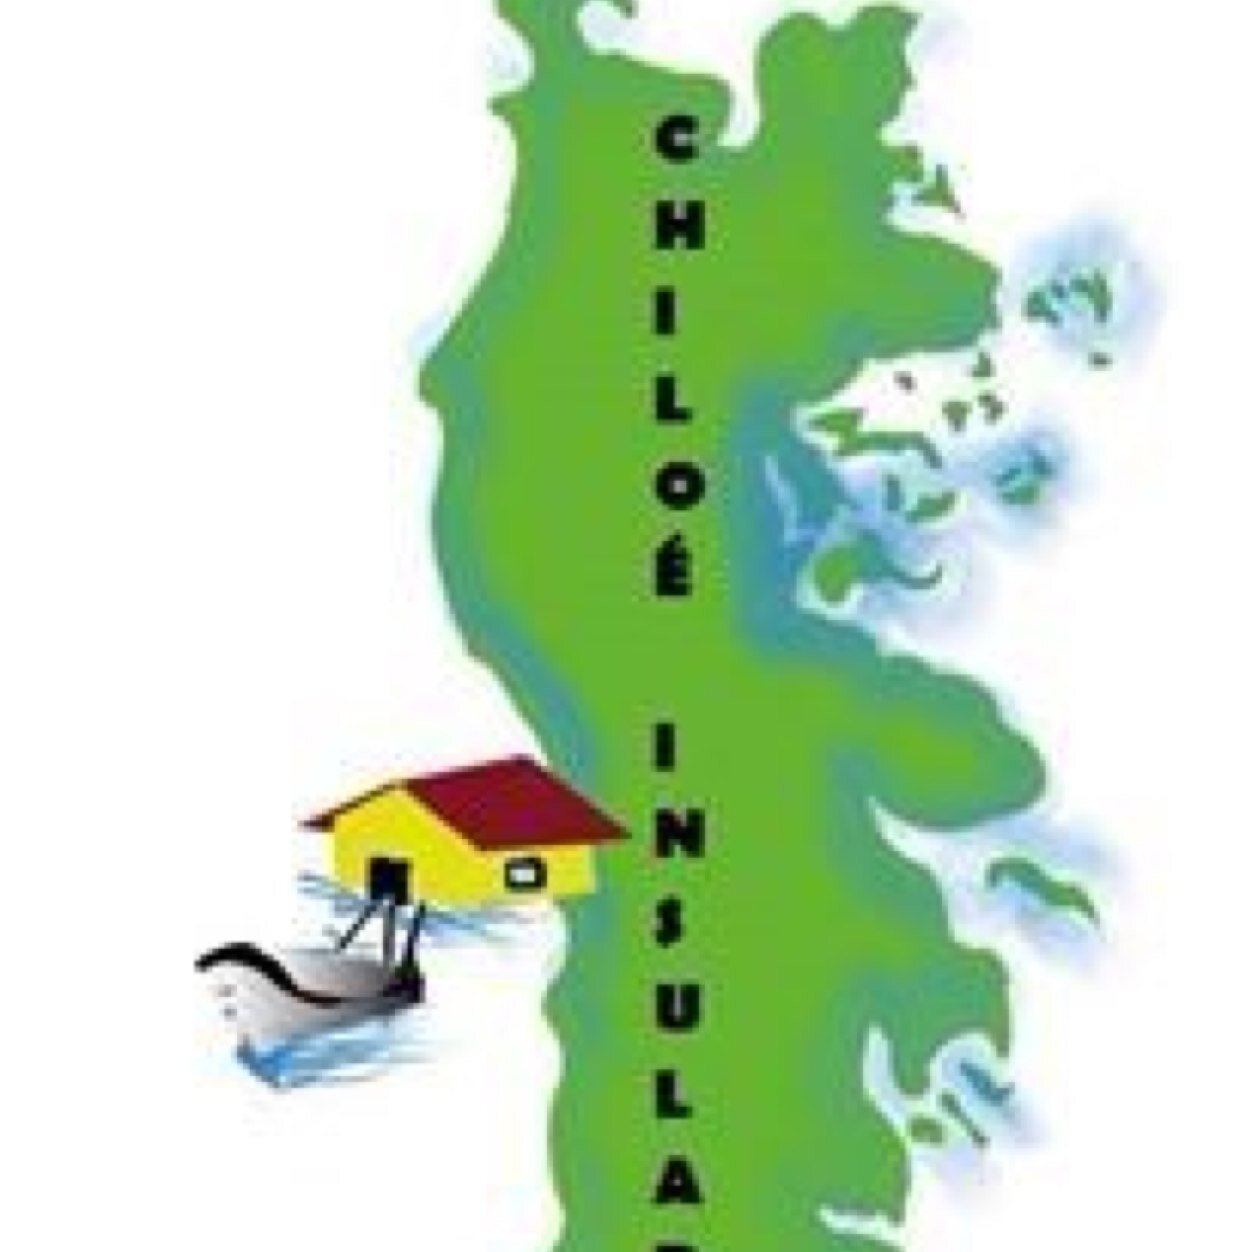 Sitio web de noticias desde Chiloé https://t.co/X17cwAGzDW